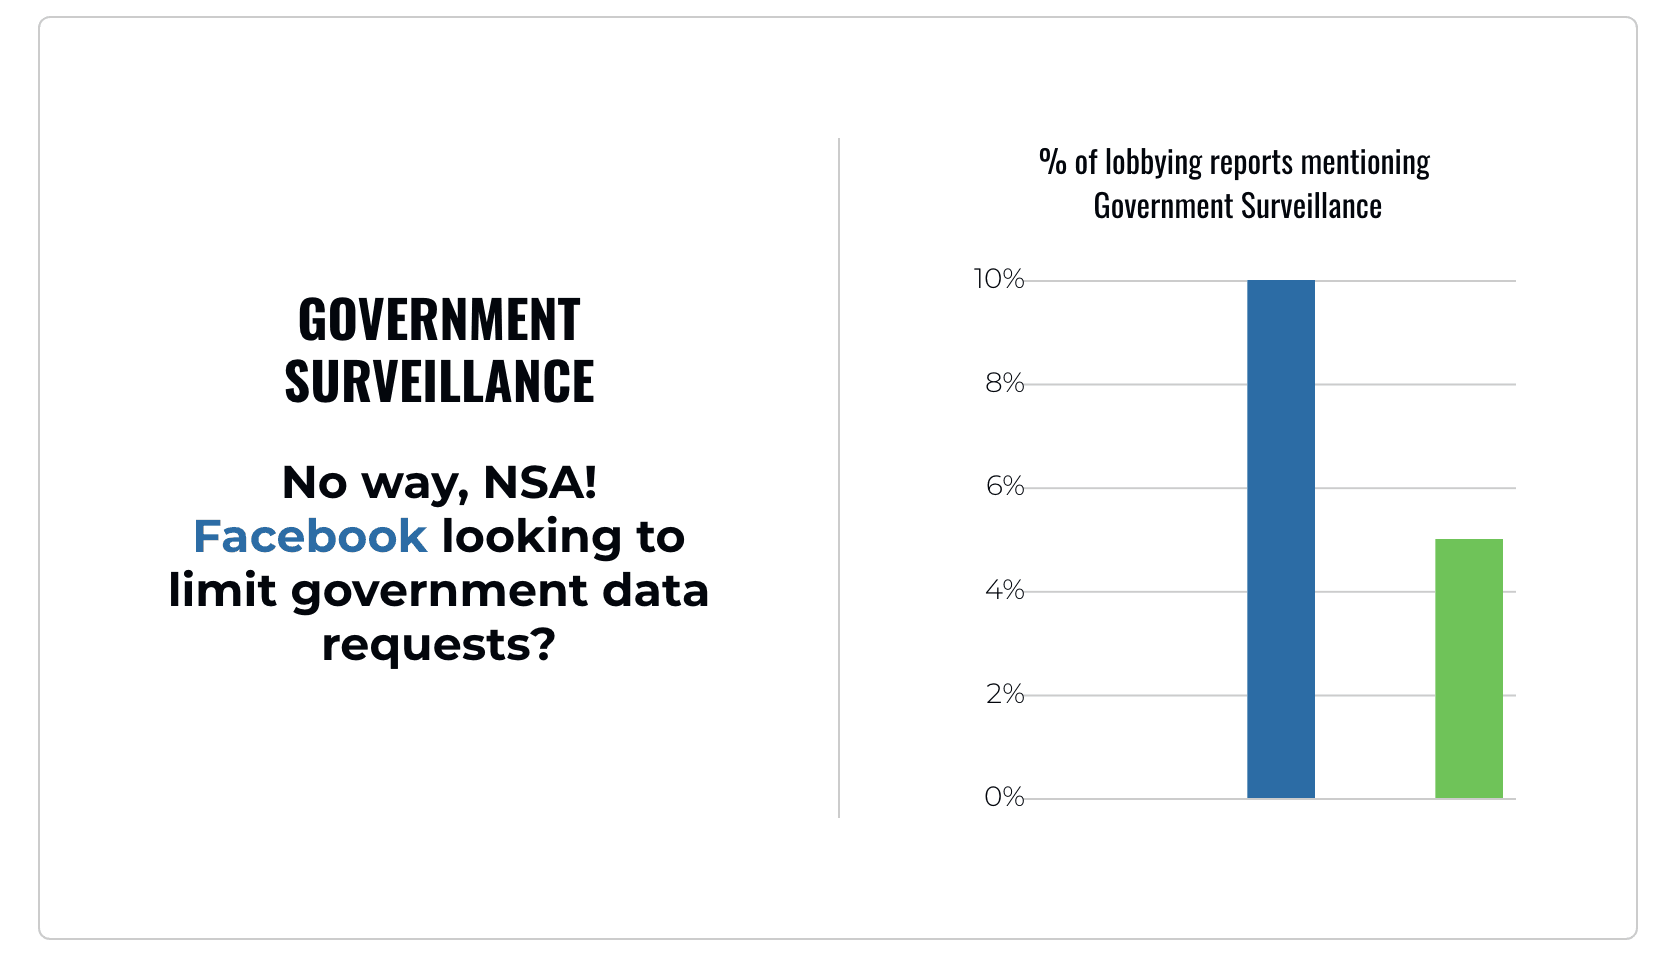 Government surveillance